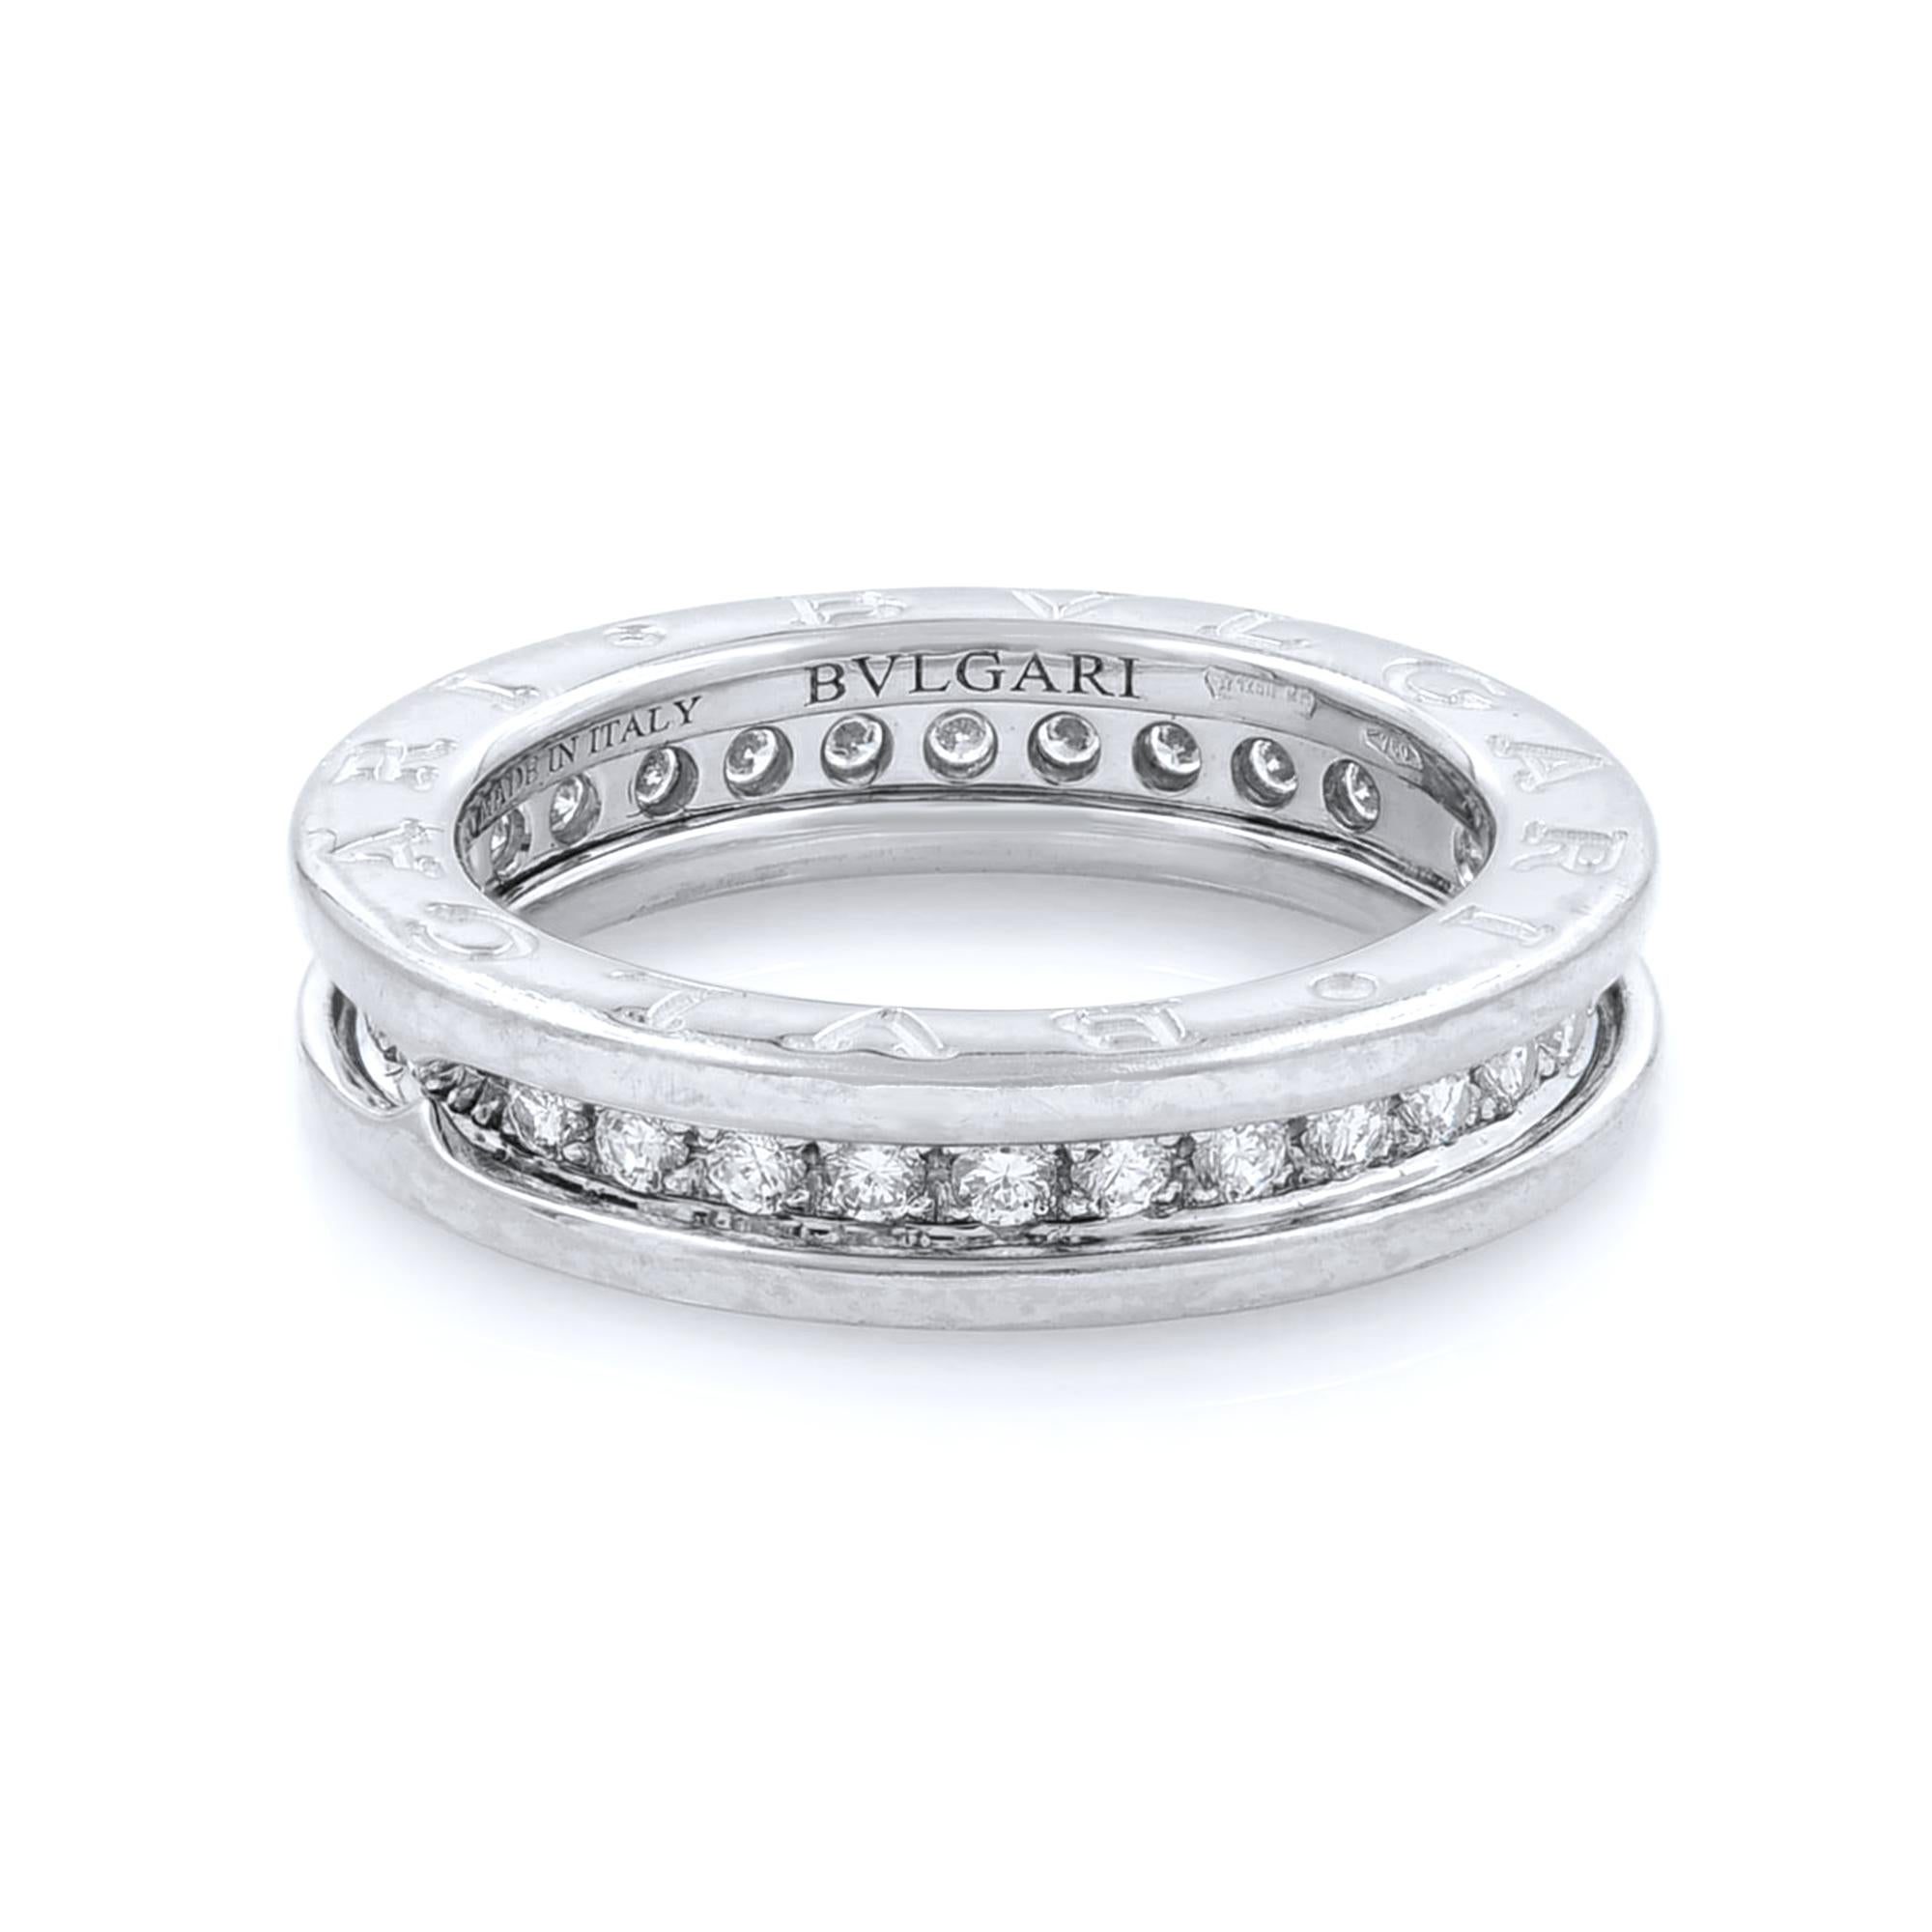 Bvlgari 18K White Gold Diamond Ring SZ5.25

The B.Zero1 1 band diamond ring is a signature piece from the legendary jewelry design house Bvlgari. It features a clean, modern design that features 18k white gold with stunning sparkling diamonds